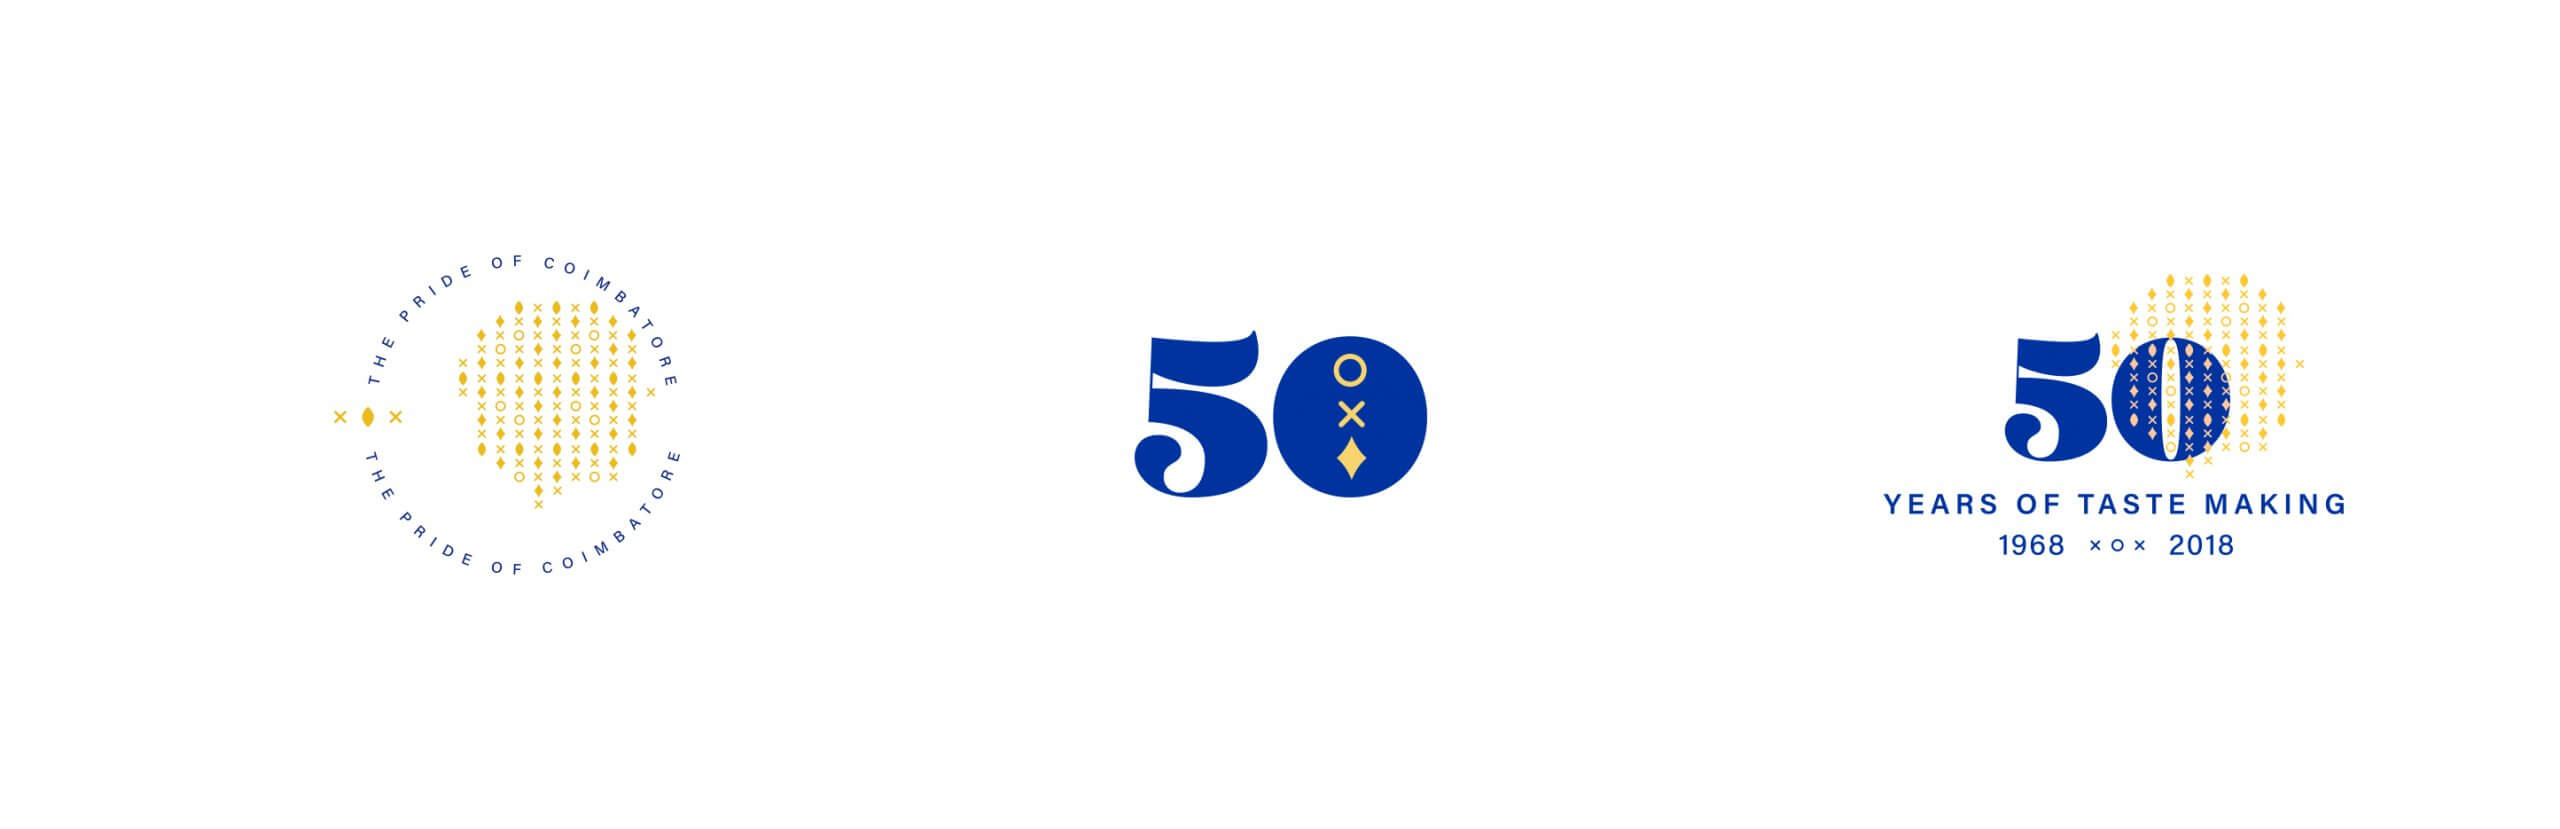 Annapoorna_50-Celebration-Badge_v04_2020